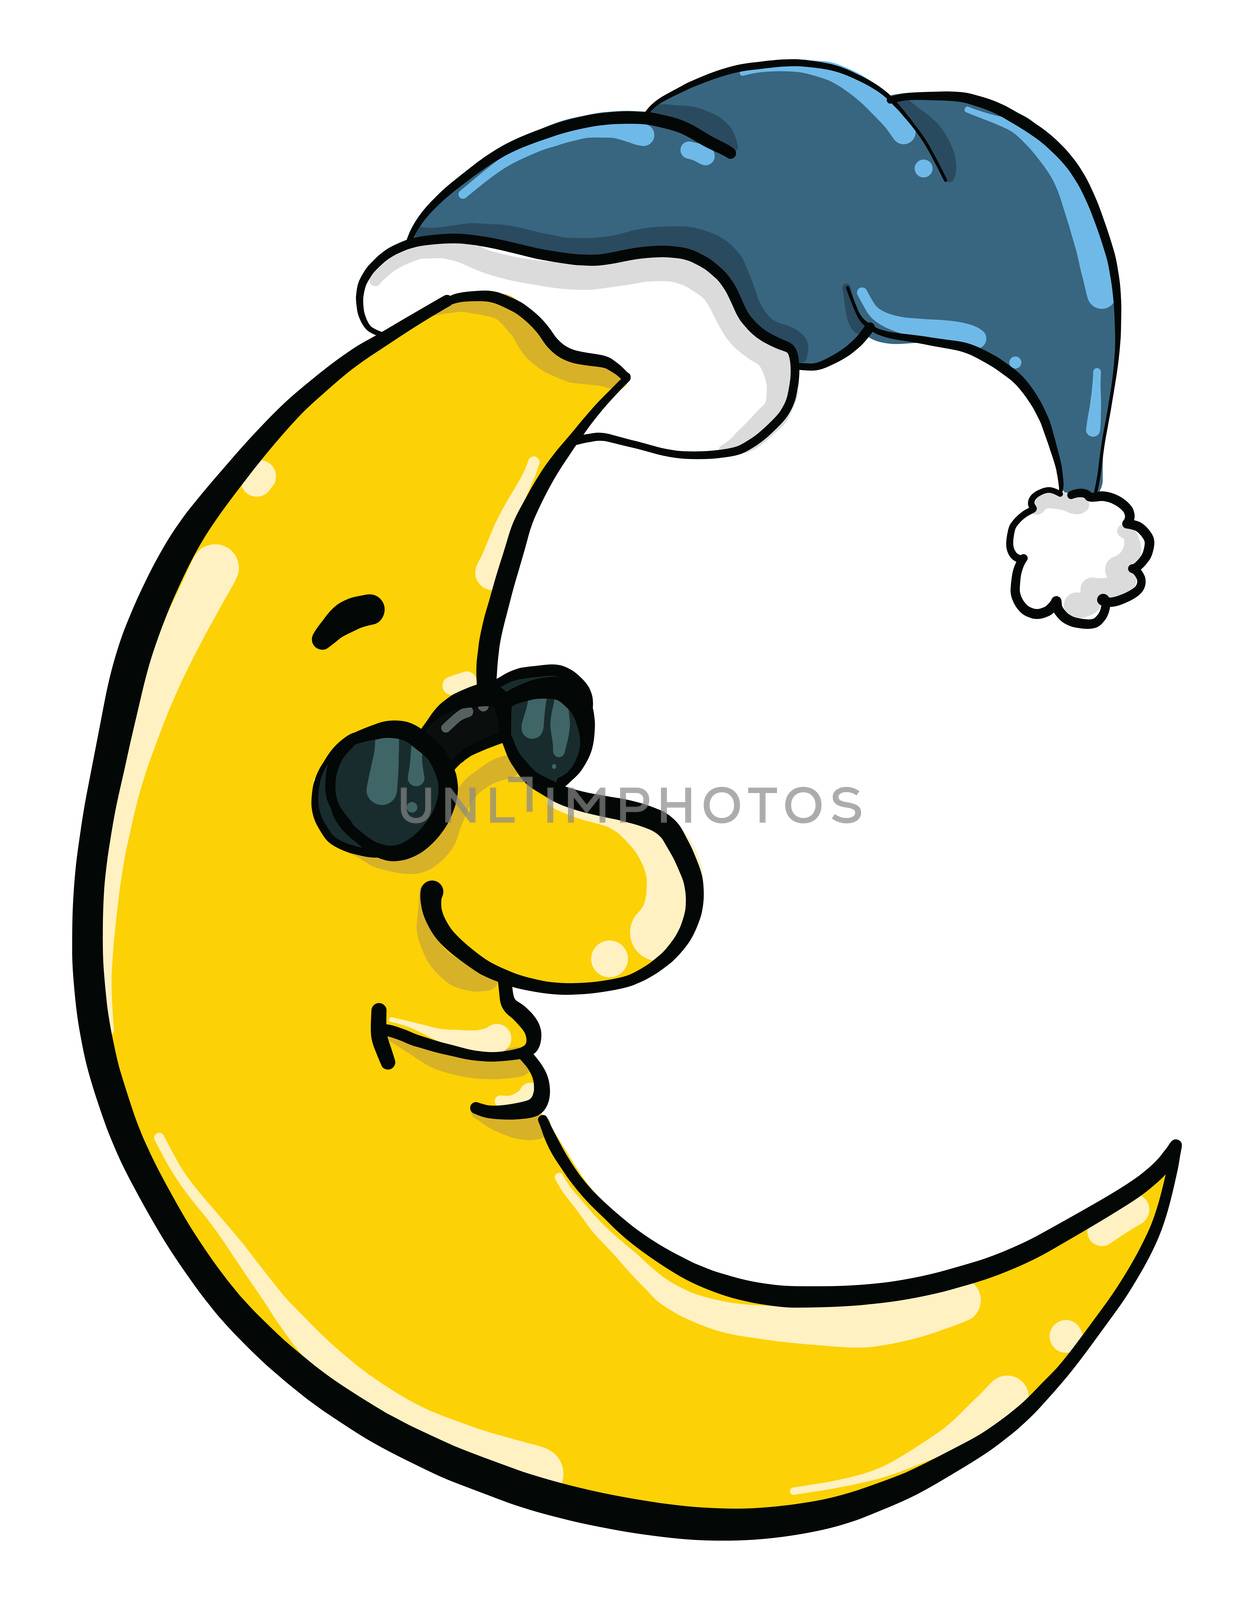 Sleepy moon , illustration, vector on white background by Morphart